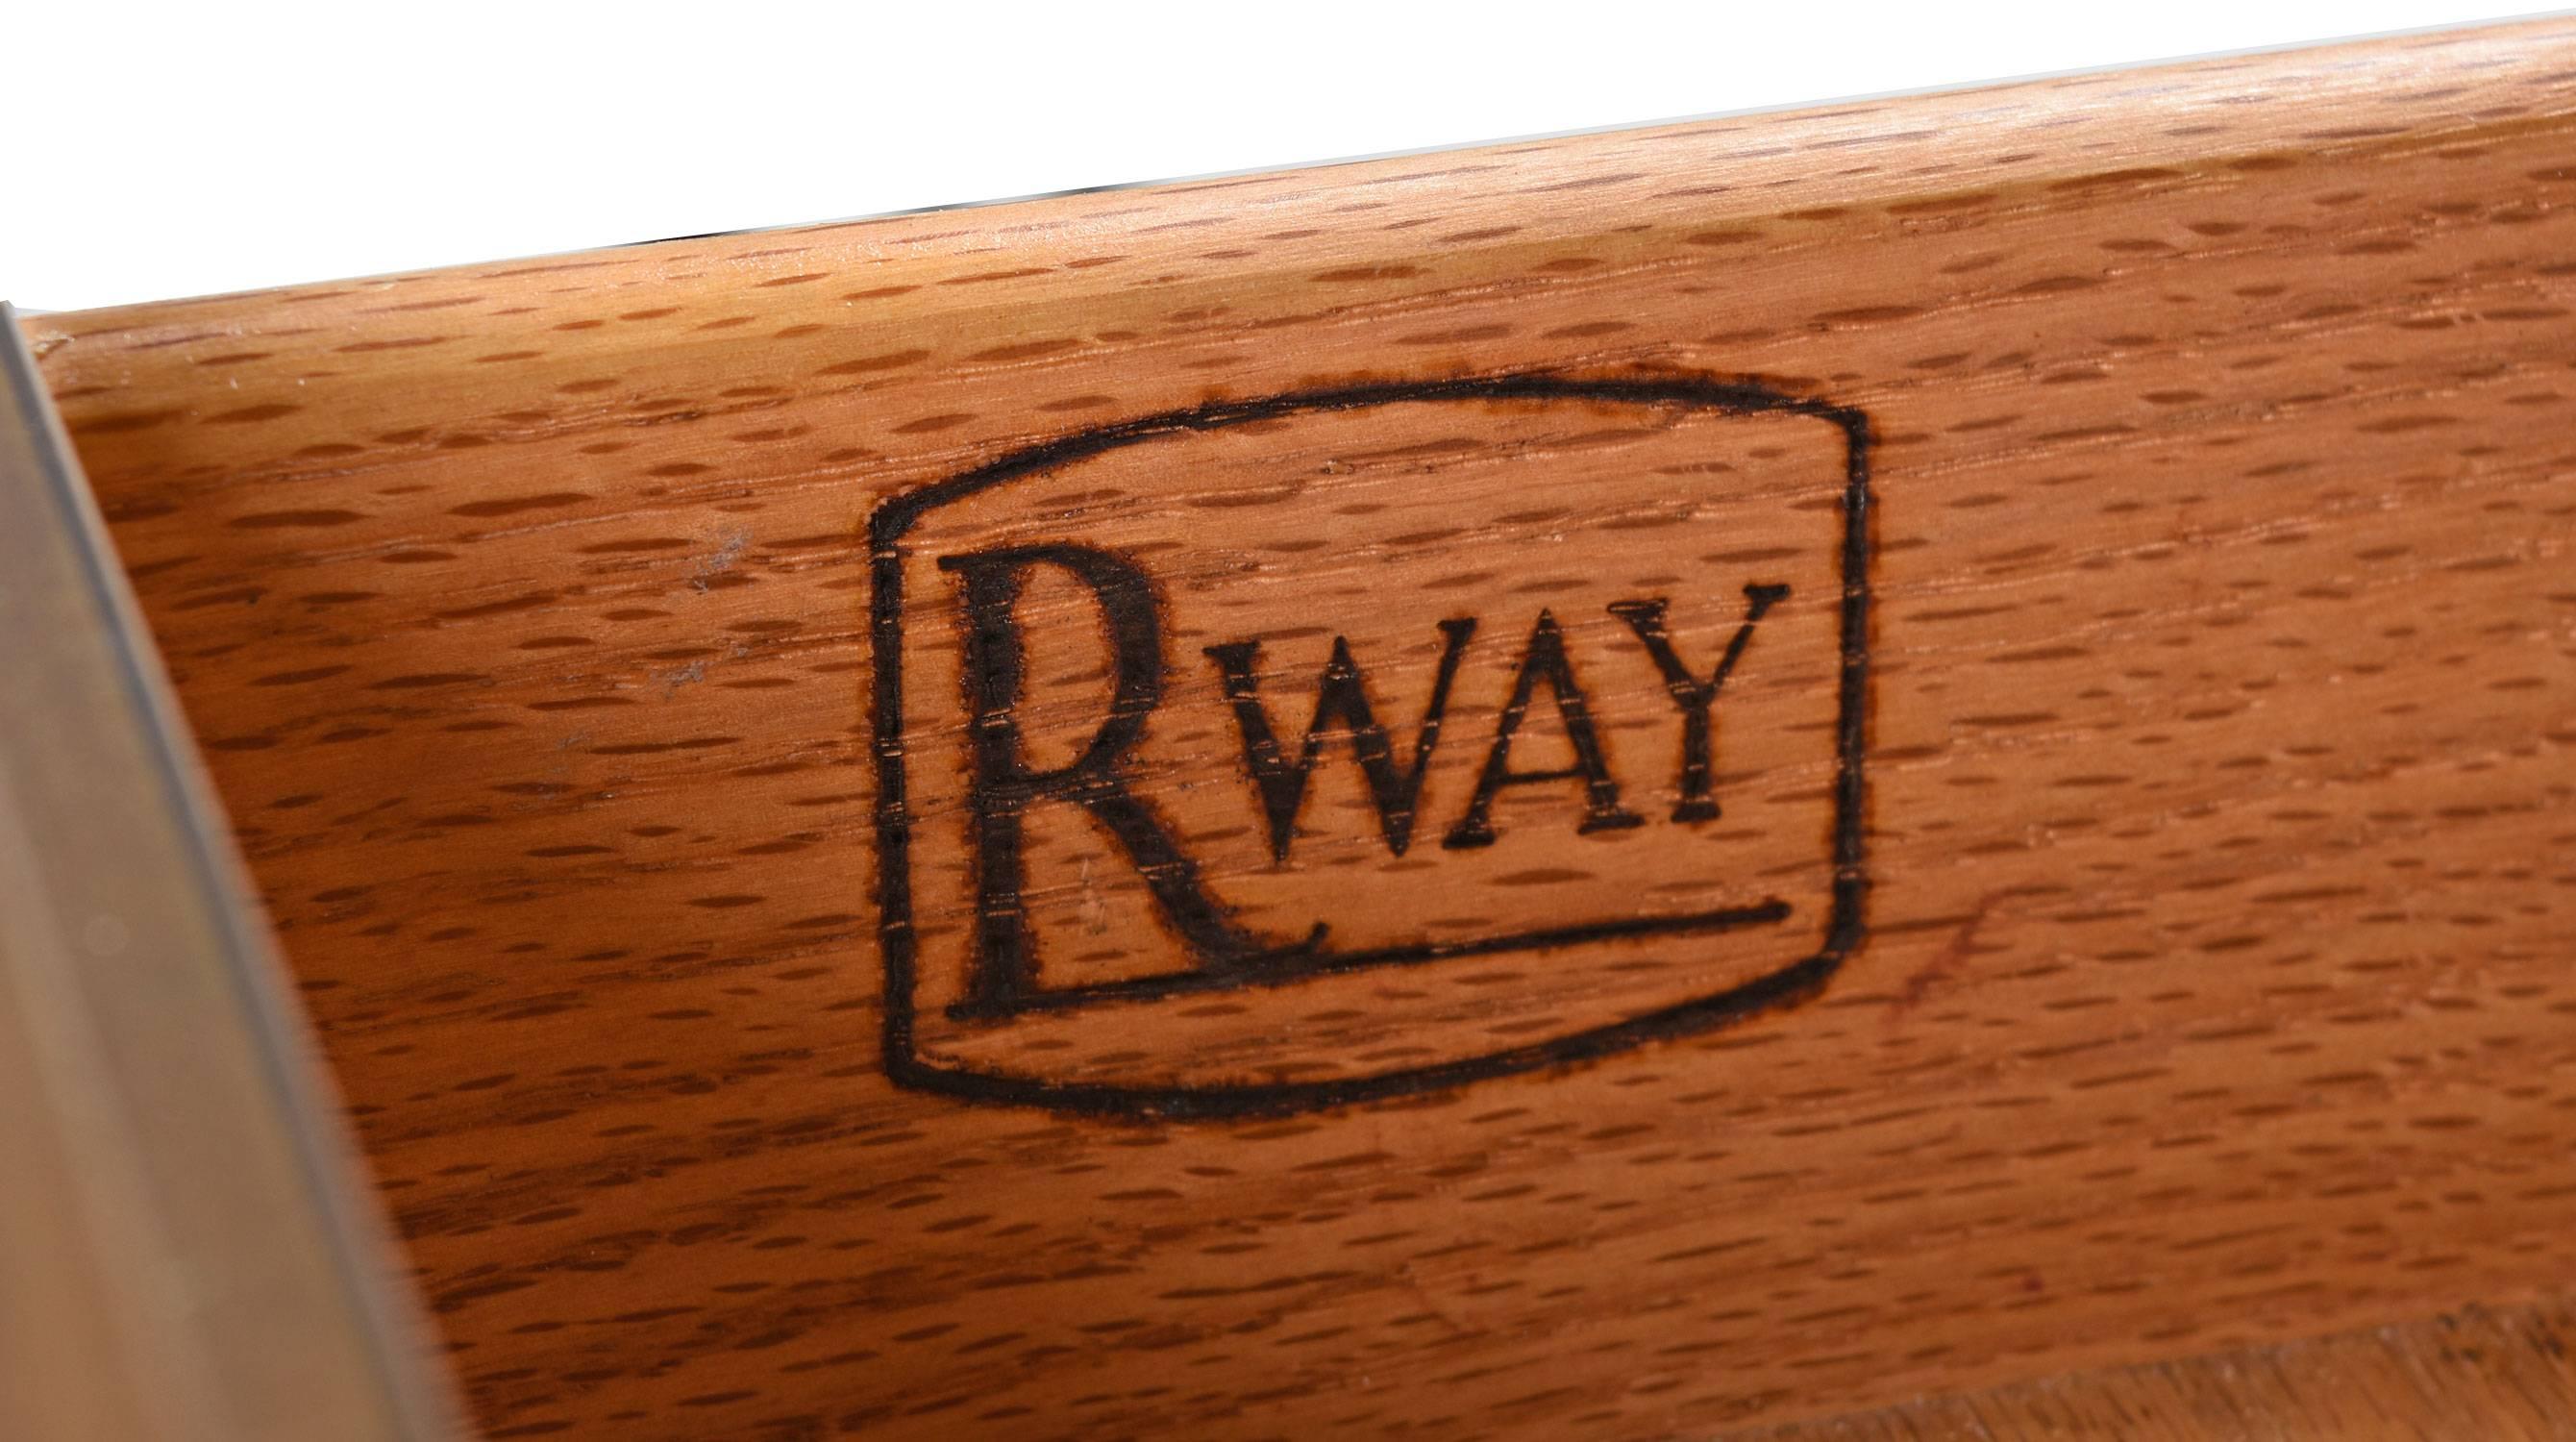 Rway Mid-Century Modern Walnut Chest of Drawers Highboy Dresser with Brass Pulls 1